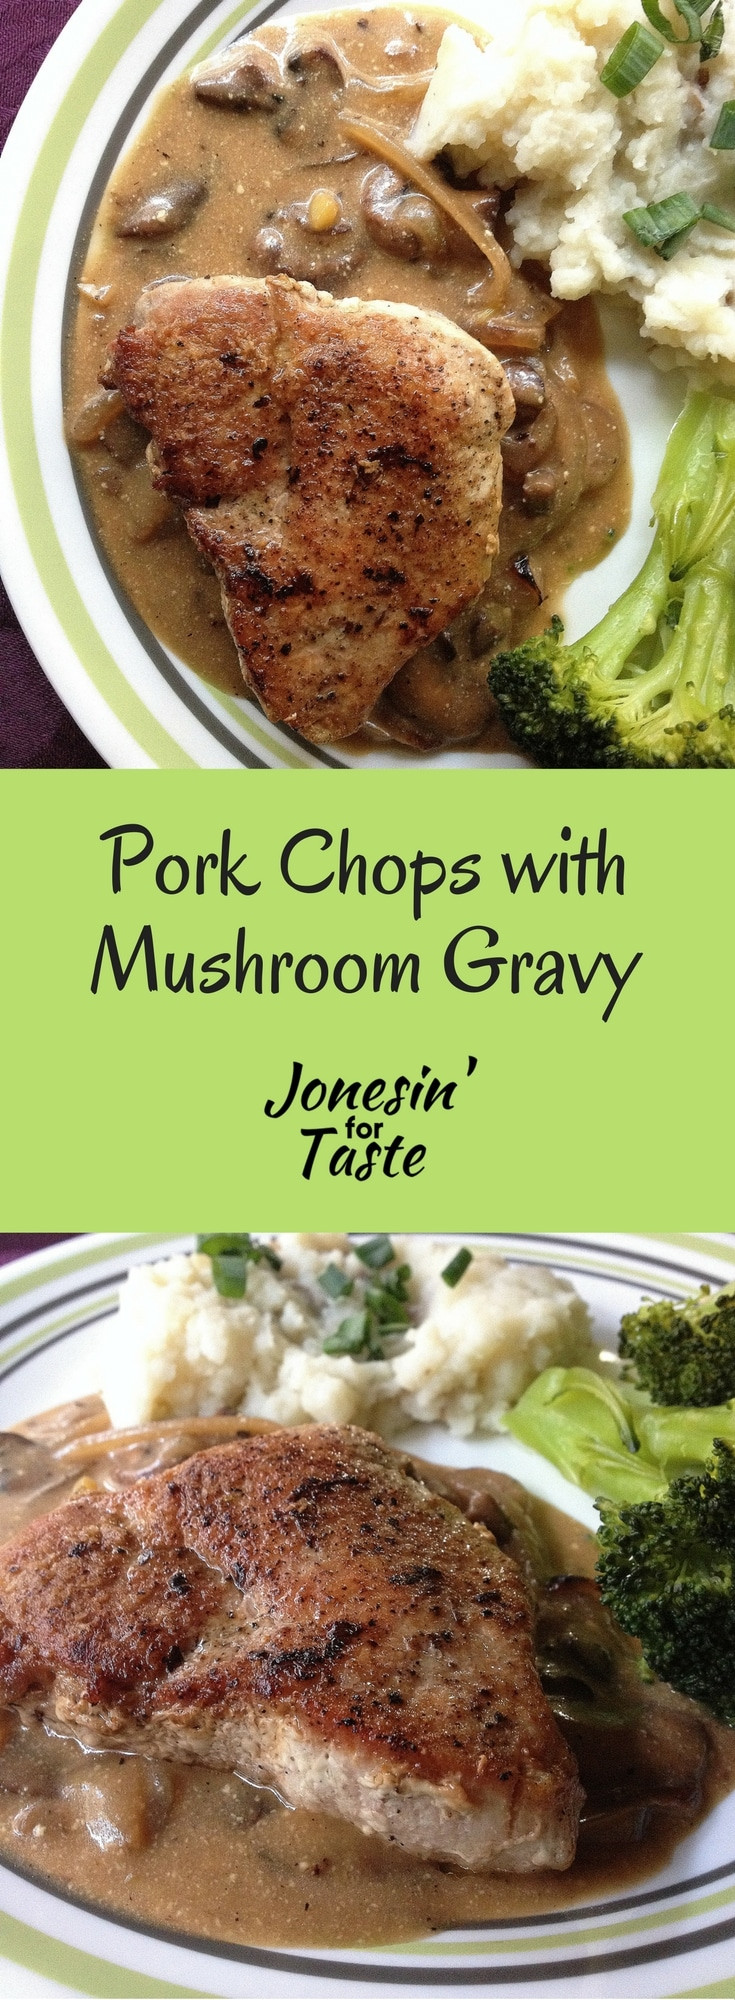 Pork Chops With Mushroom Gravy Recipe
 Easy 30 Minute Pork Chops with Mushroom Gravy